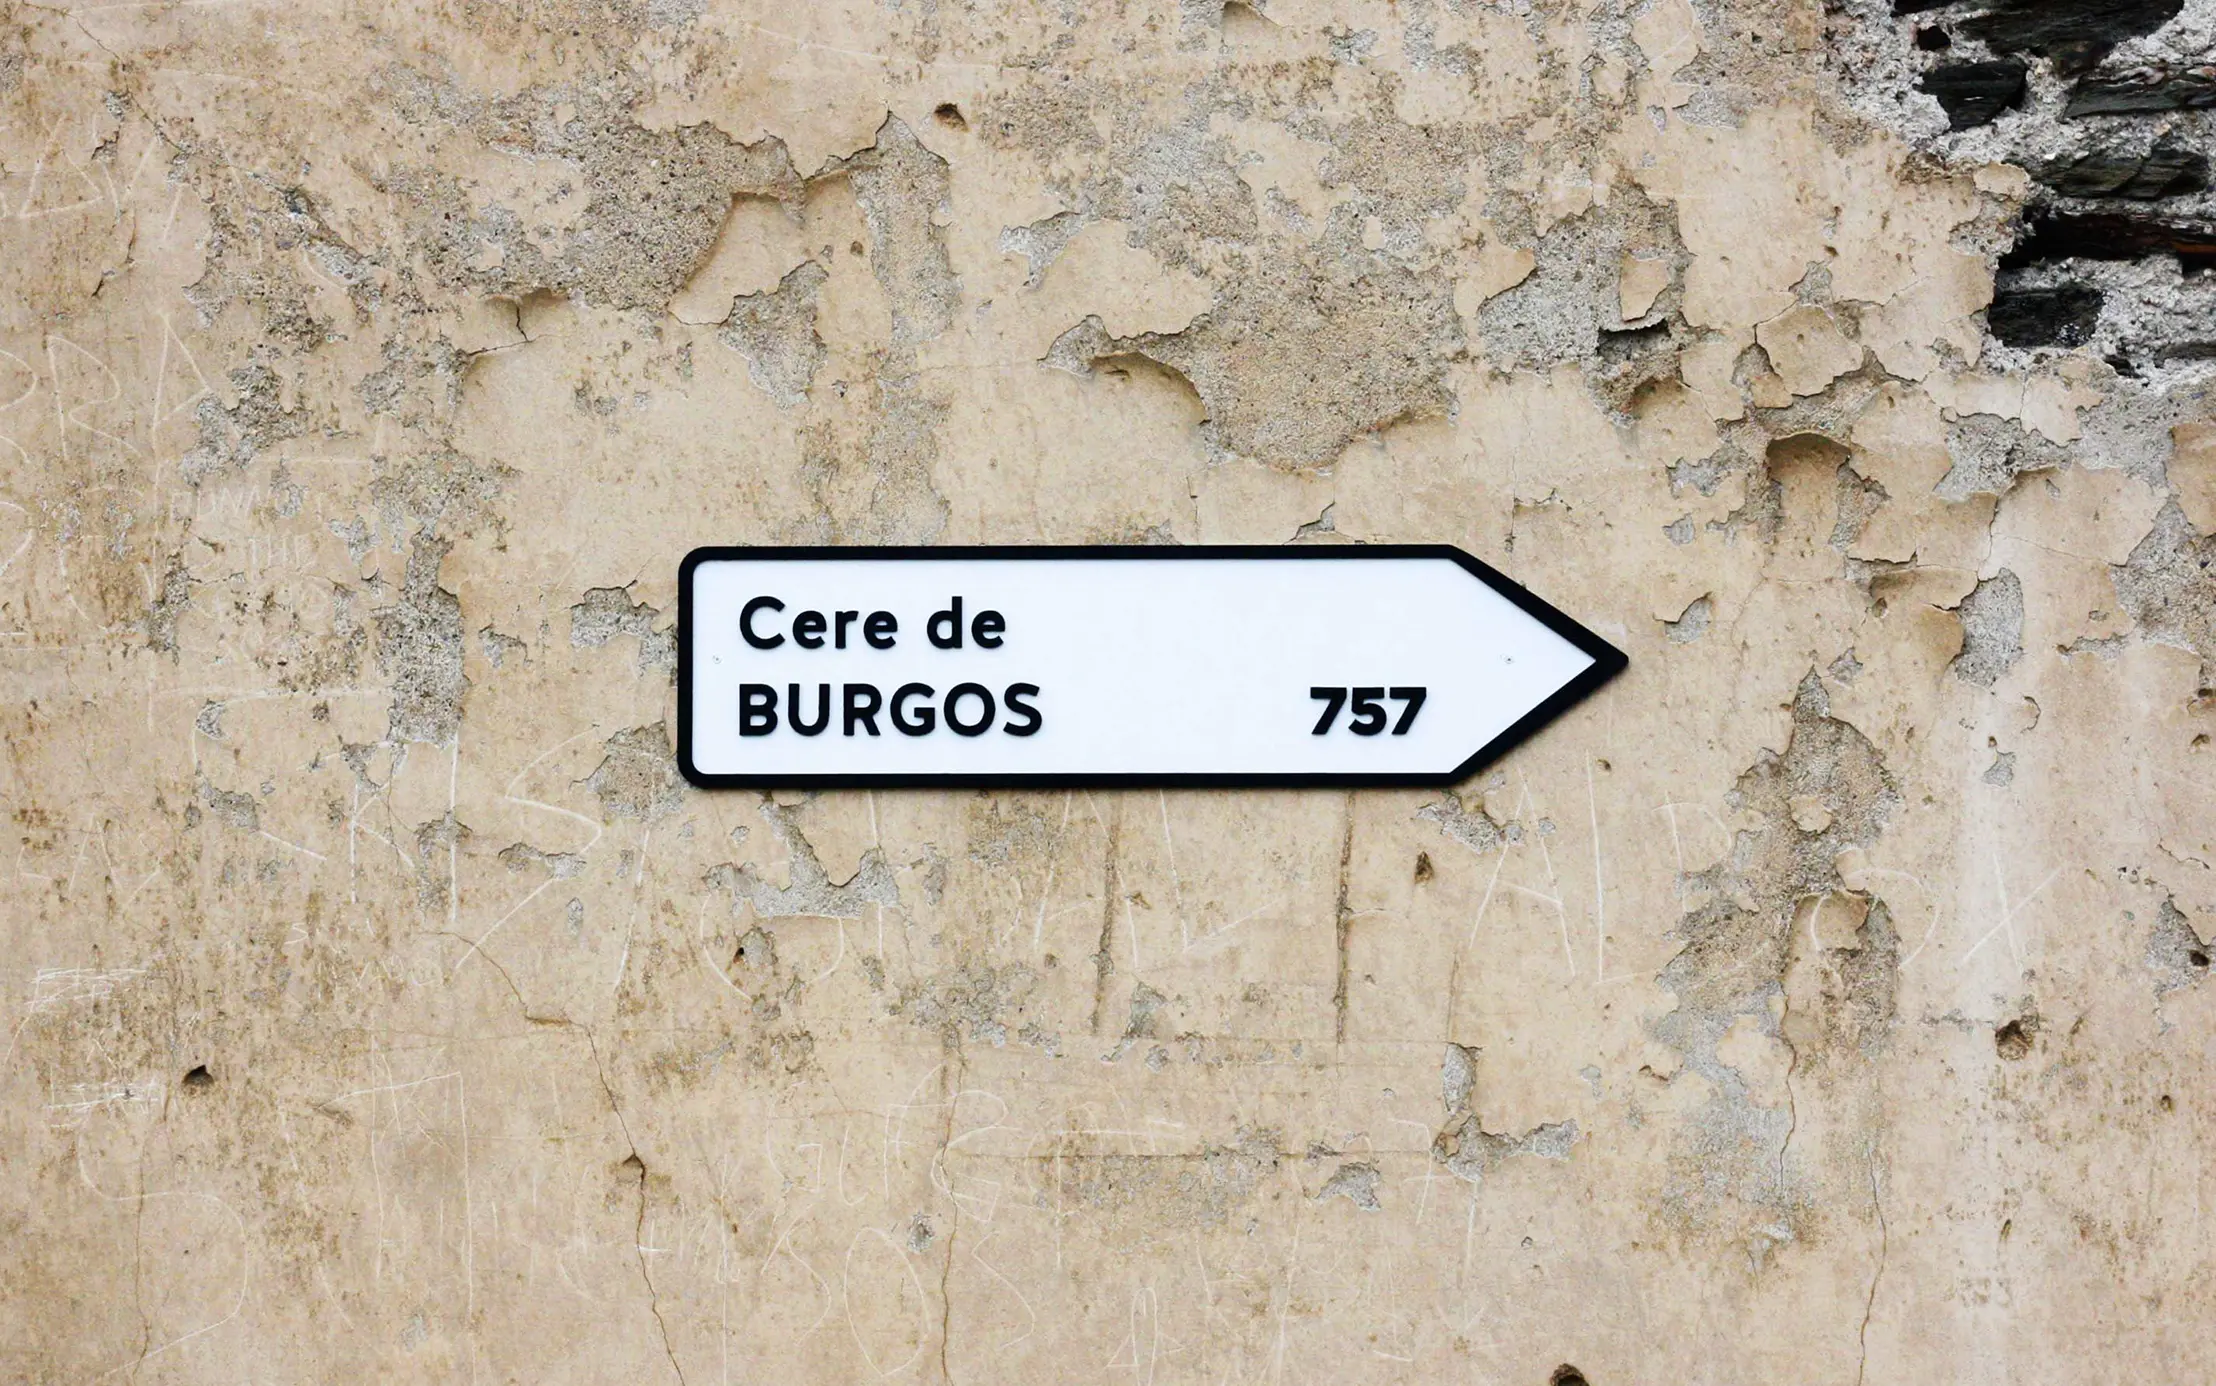 Cere de Burgos